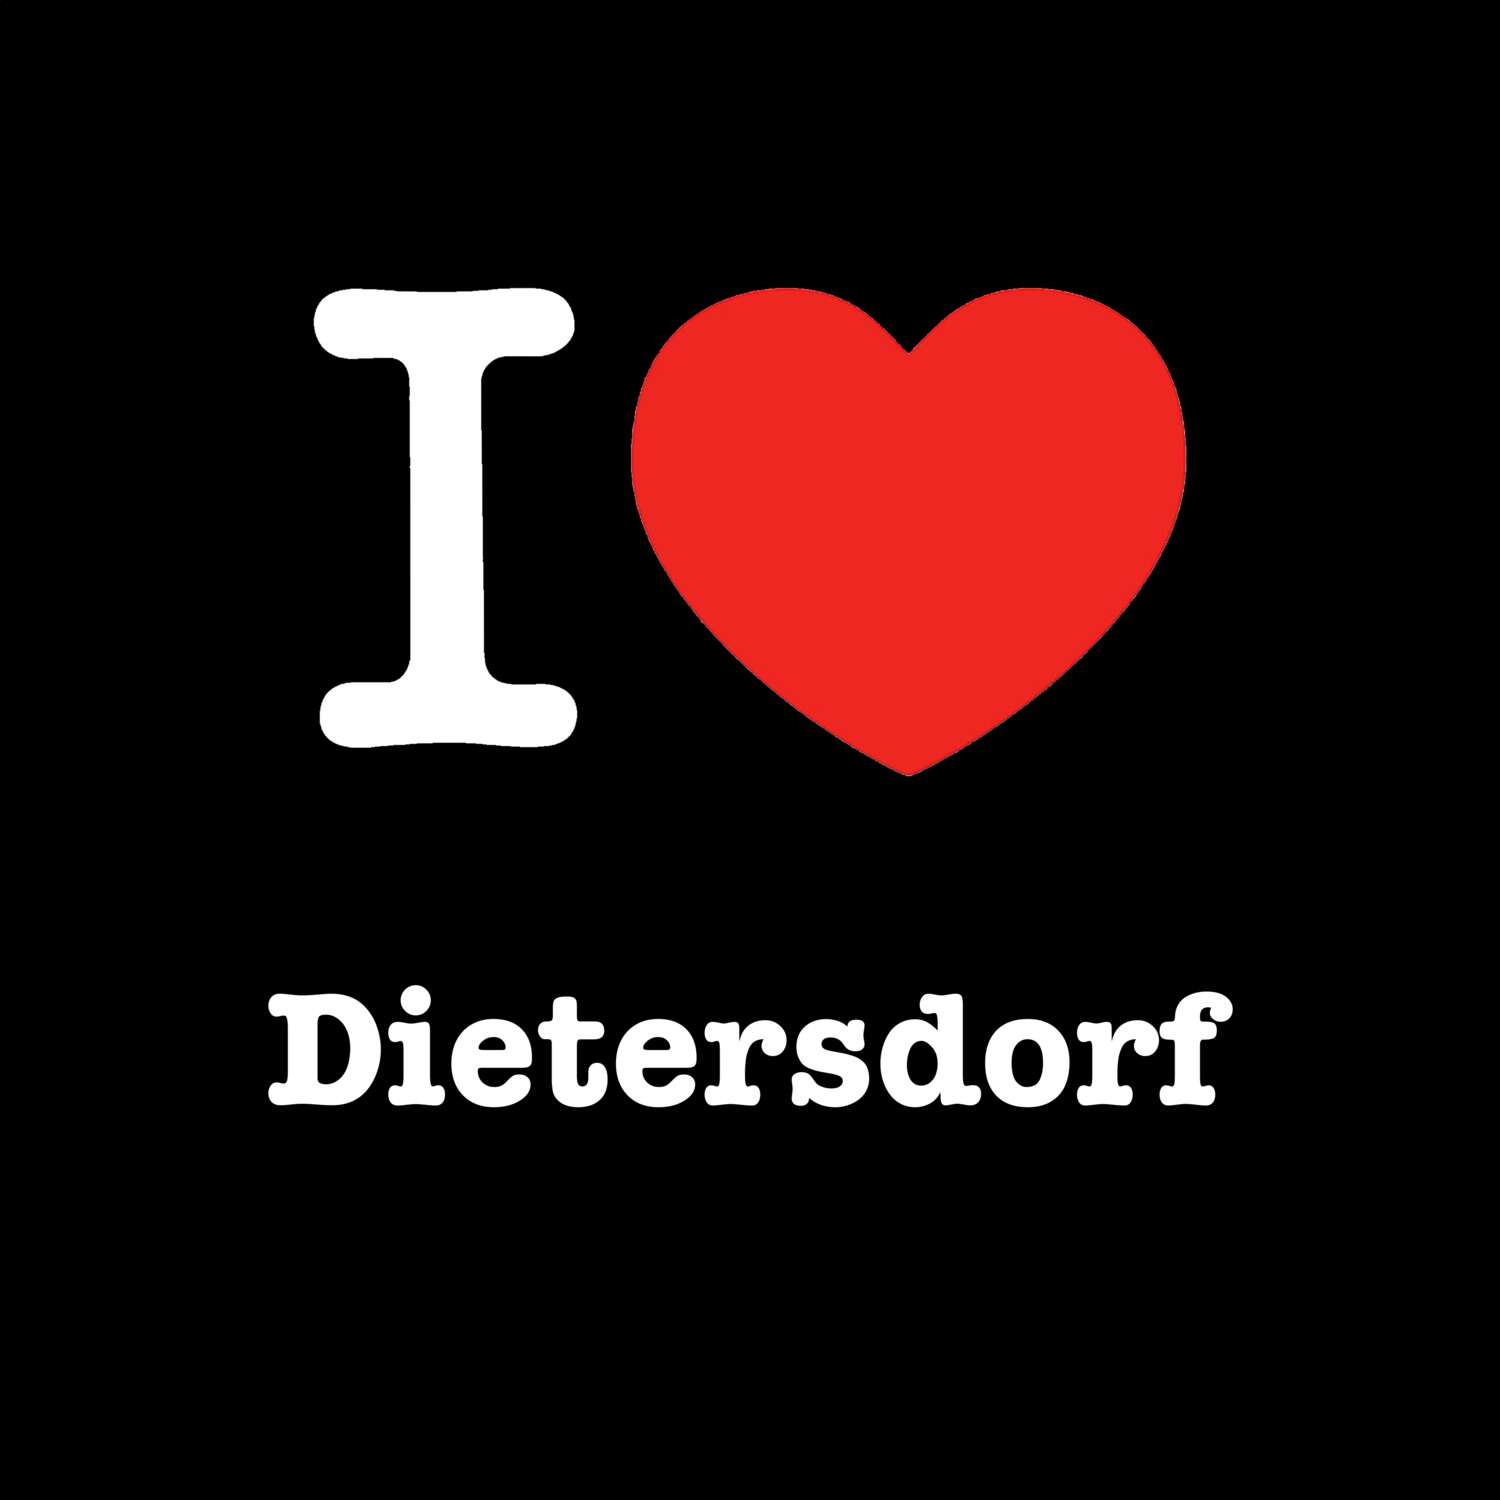 Dietersdorf T-Shirt »I love«